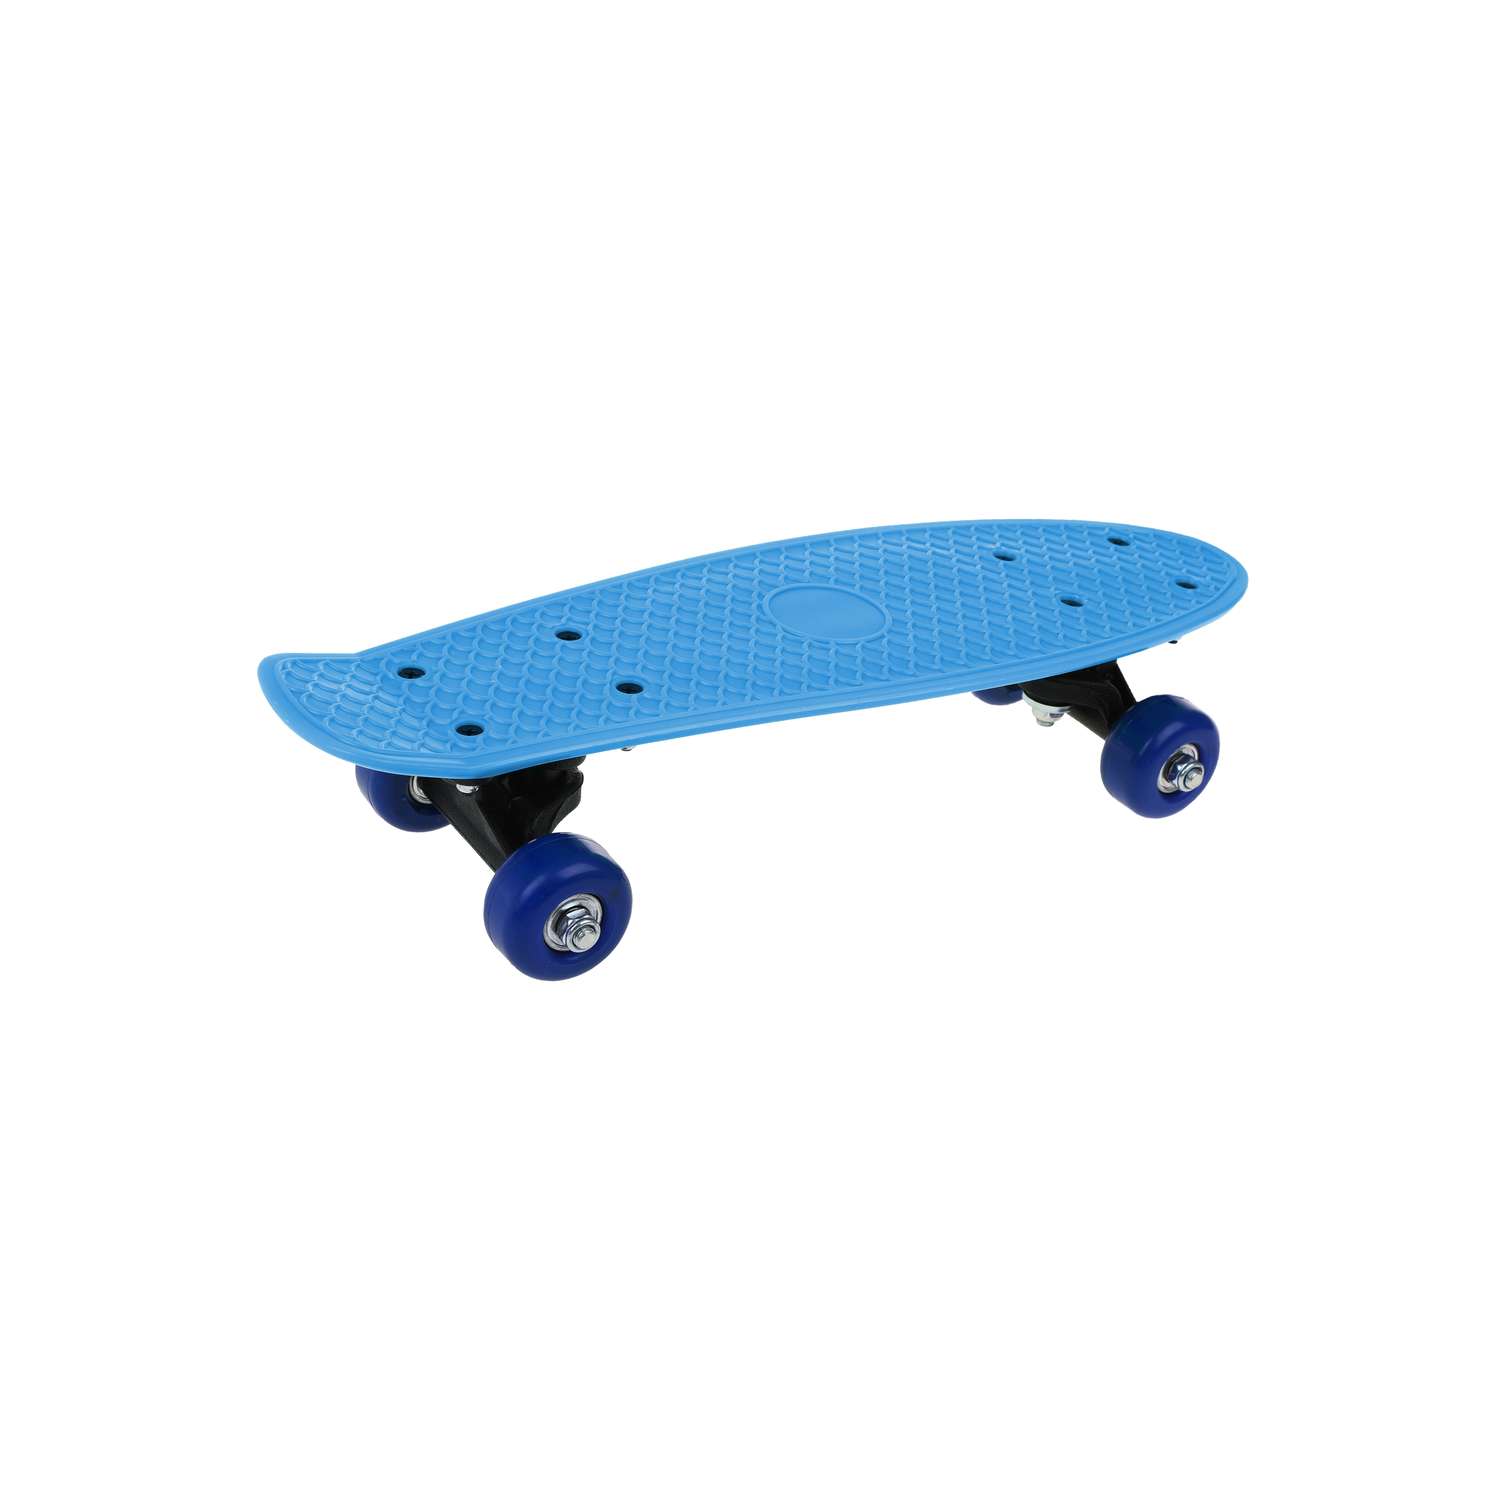 Скейтборд Наша Игрушка пенниборд 41х12 см колеса PVC крепления пластик голубой - фото 4